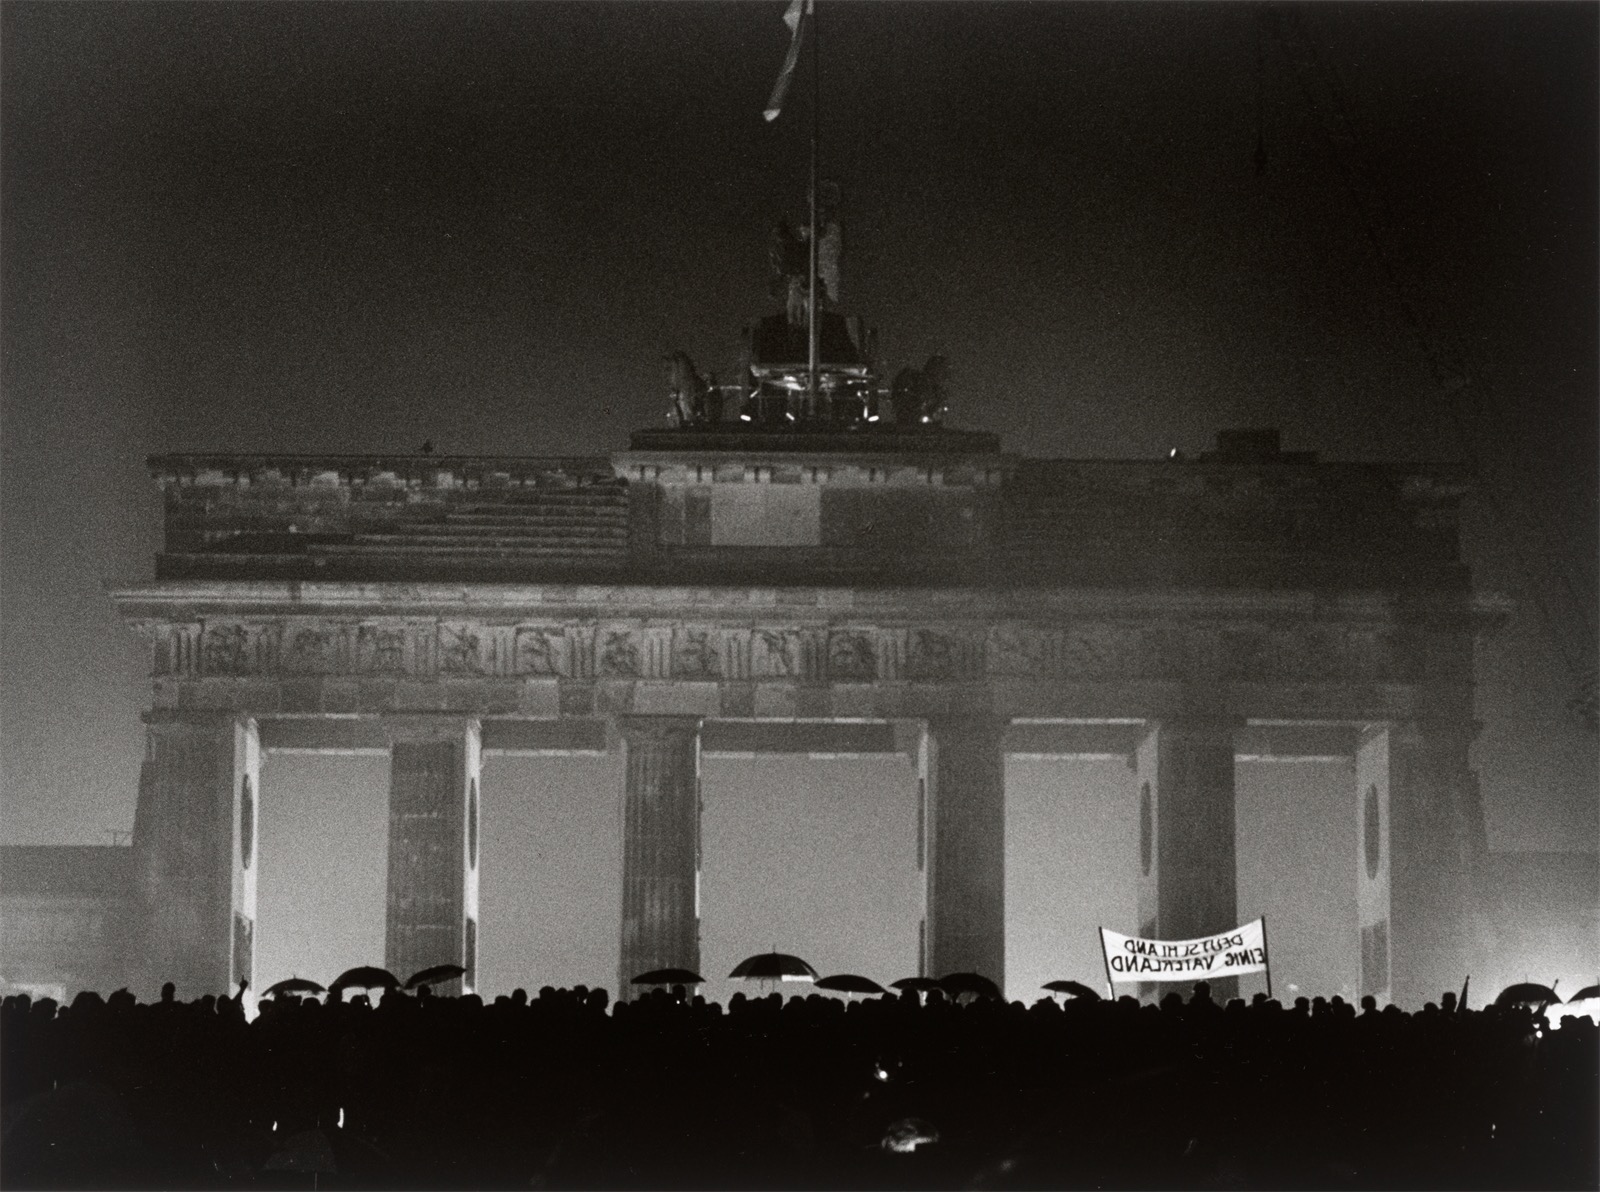 Barbara Klemm. ”Öffnung des Brandenburger Tors, Berlin, 22. Dezember, 1989”.